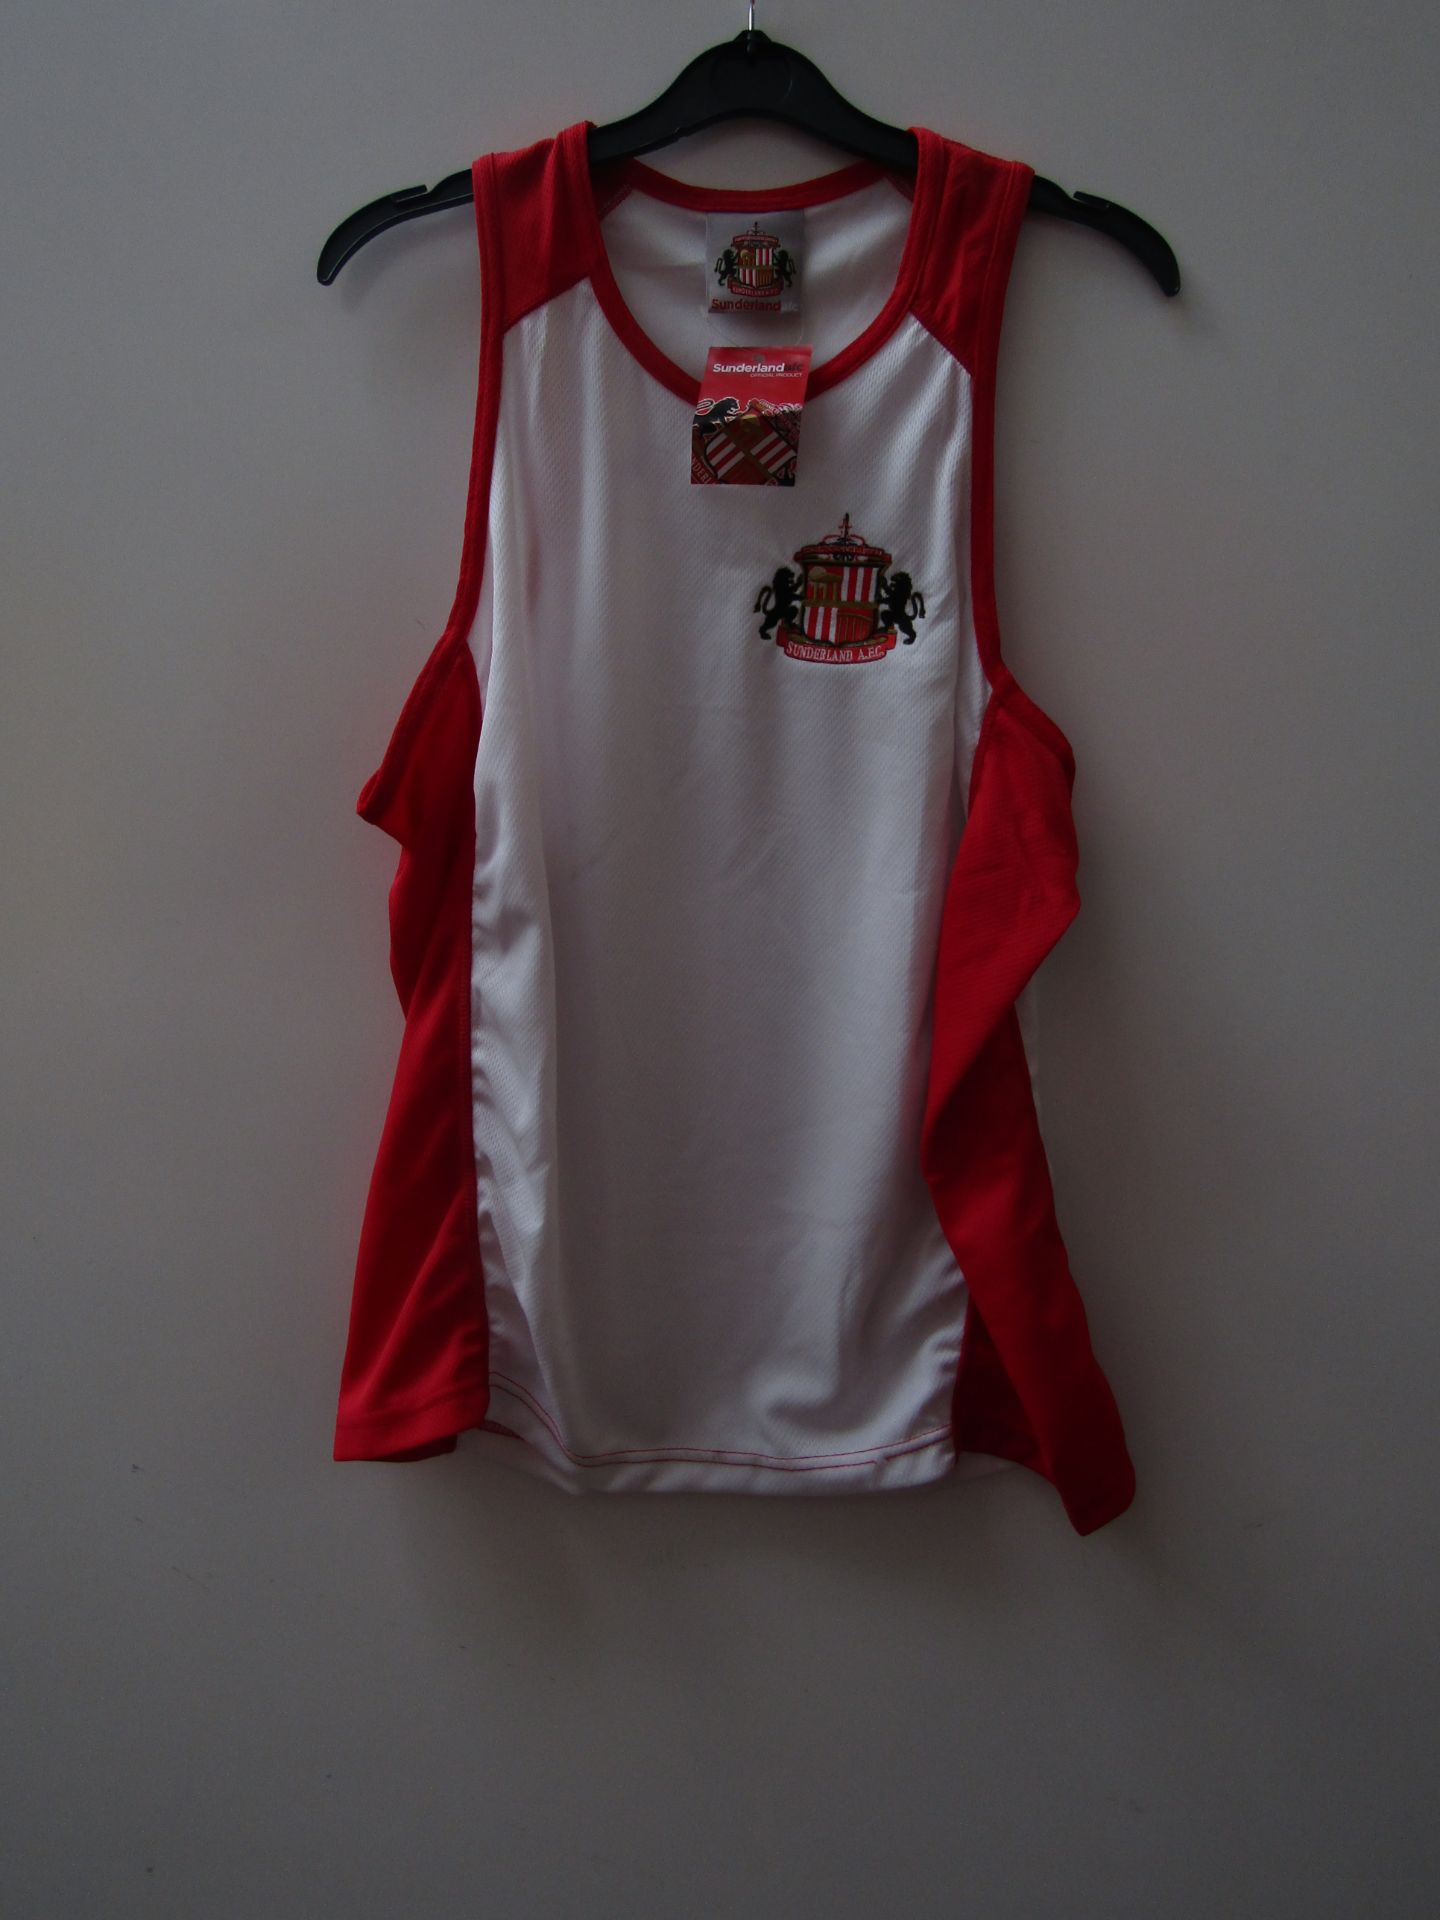 3x Sunderland Basketball style Vest Tops, new Size Medium